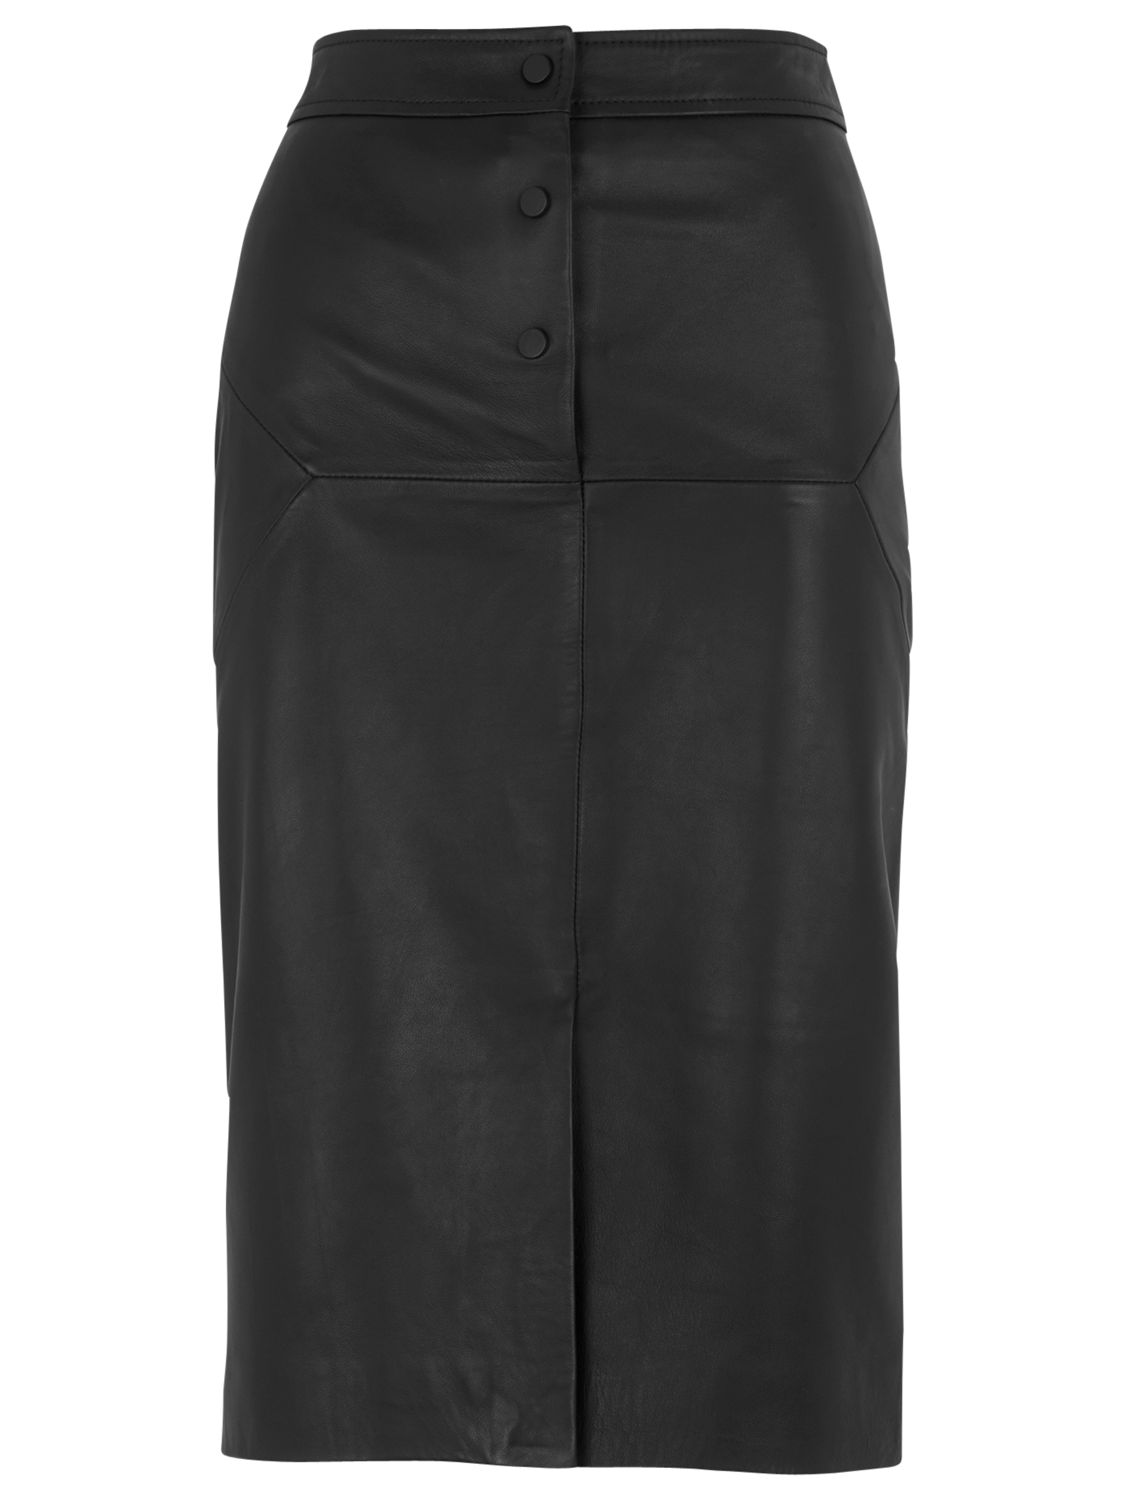 Whistles Button Leather Pencil Skirt, Black at John Lewis